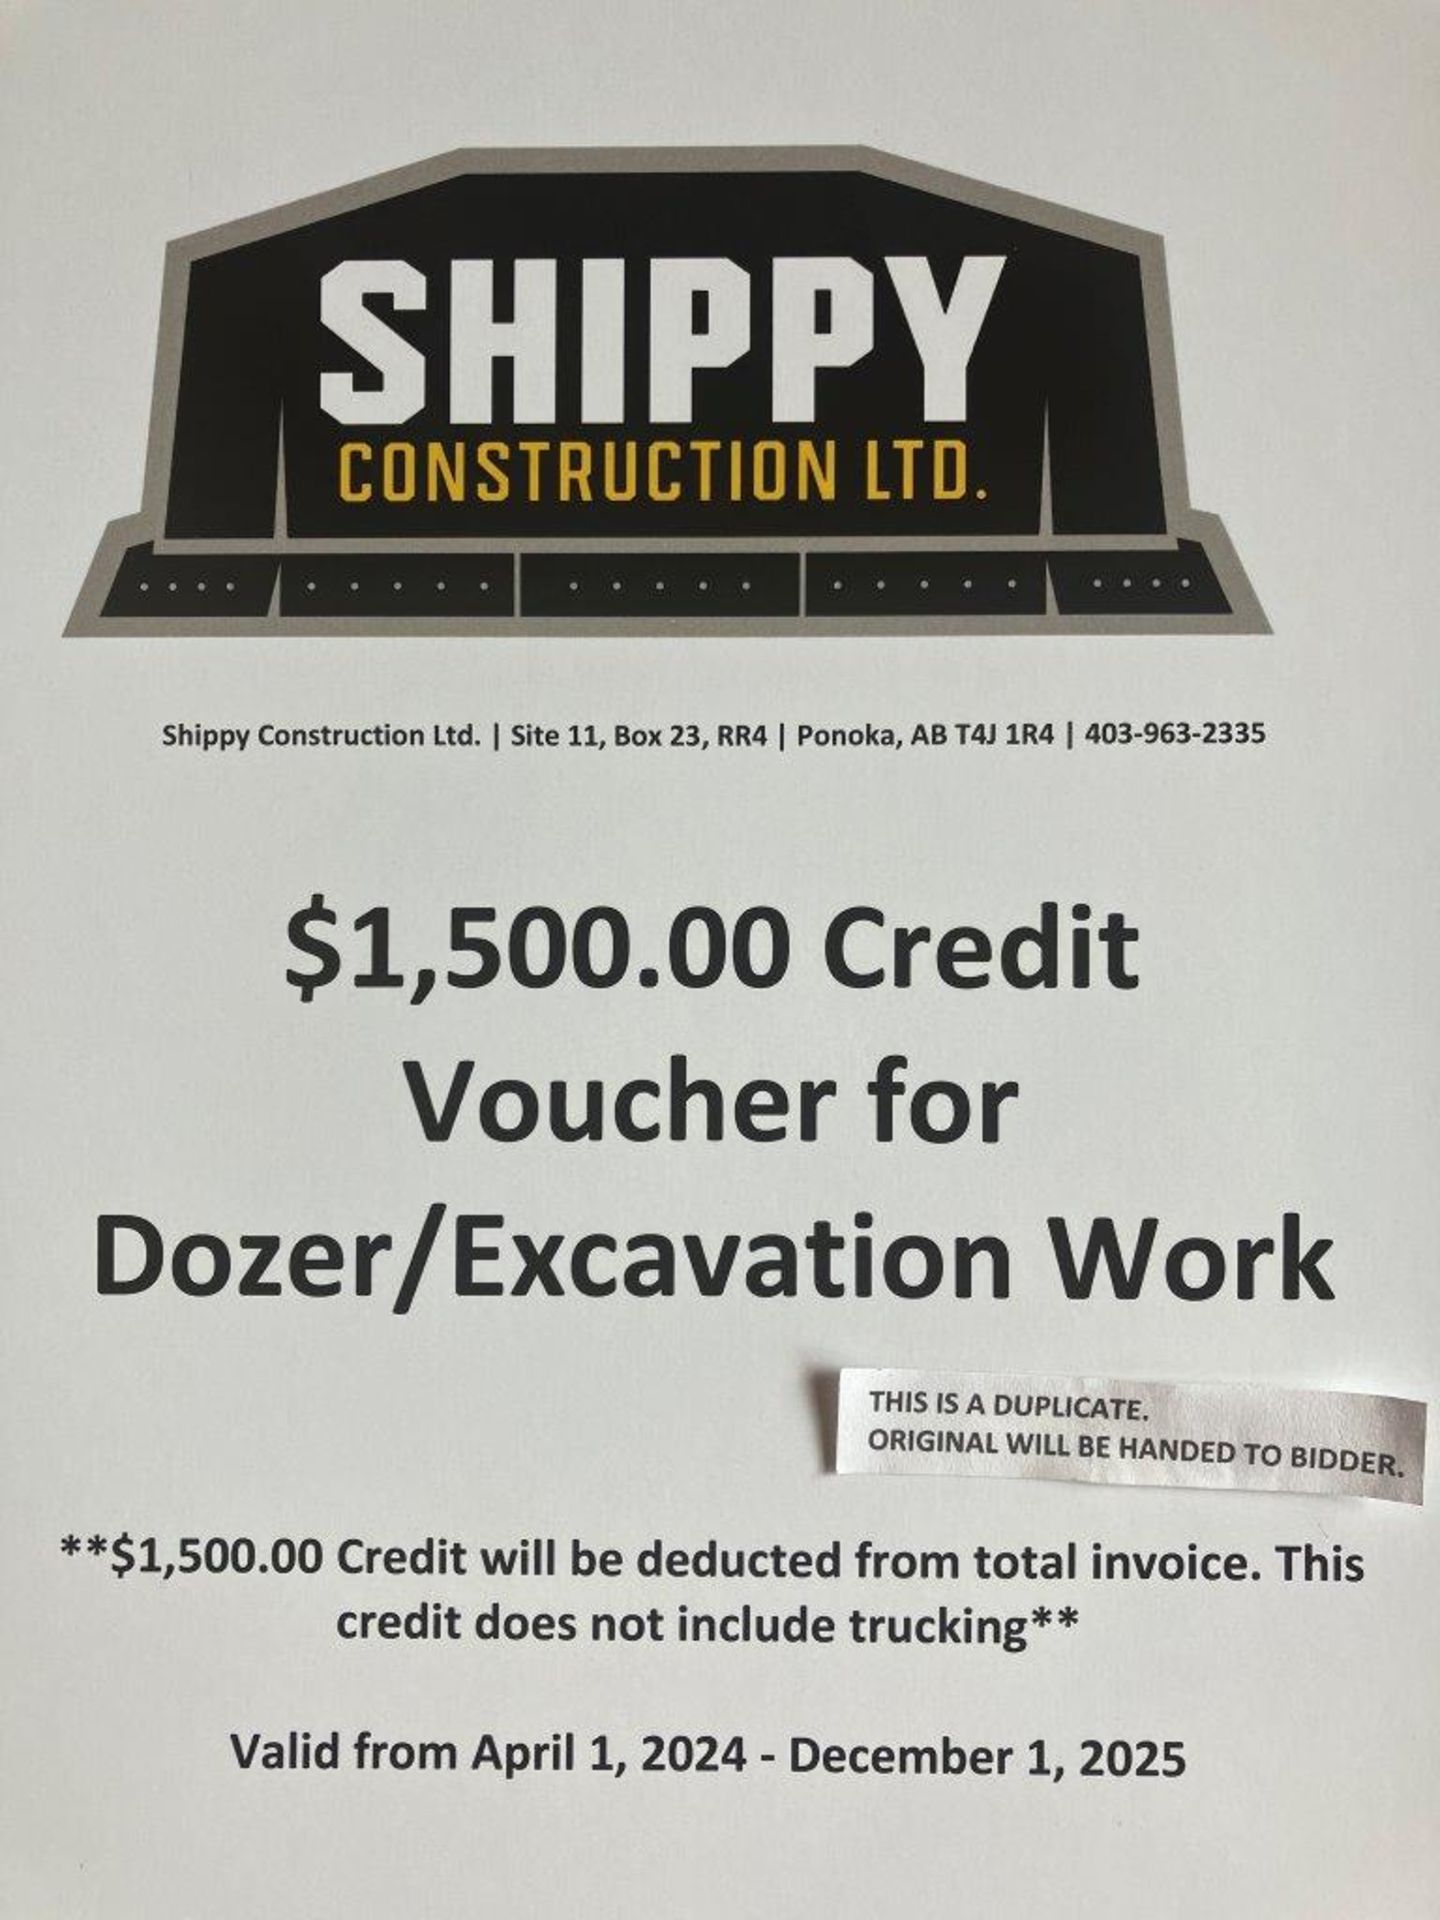 SHIPPY CONSTRUCTION LTD. $1,500.00 CREDIT VOUCHER FOR DOZER/EXCAVATION WORK - Image 2 of 2